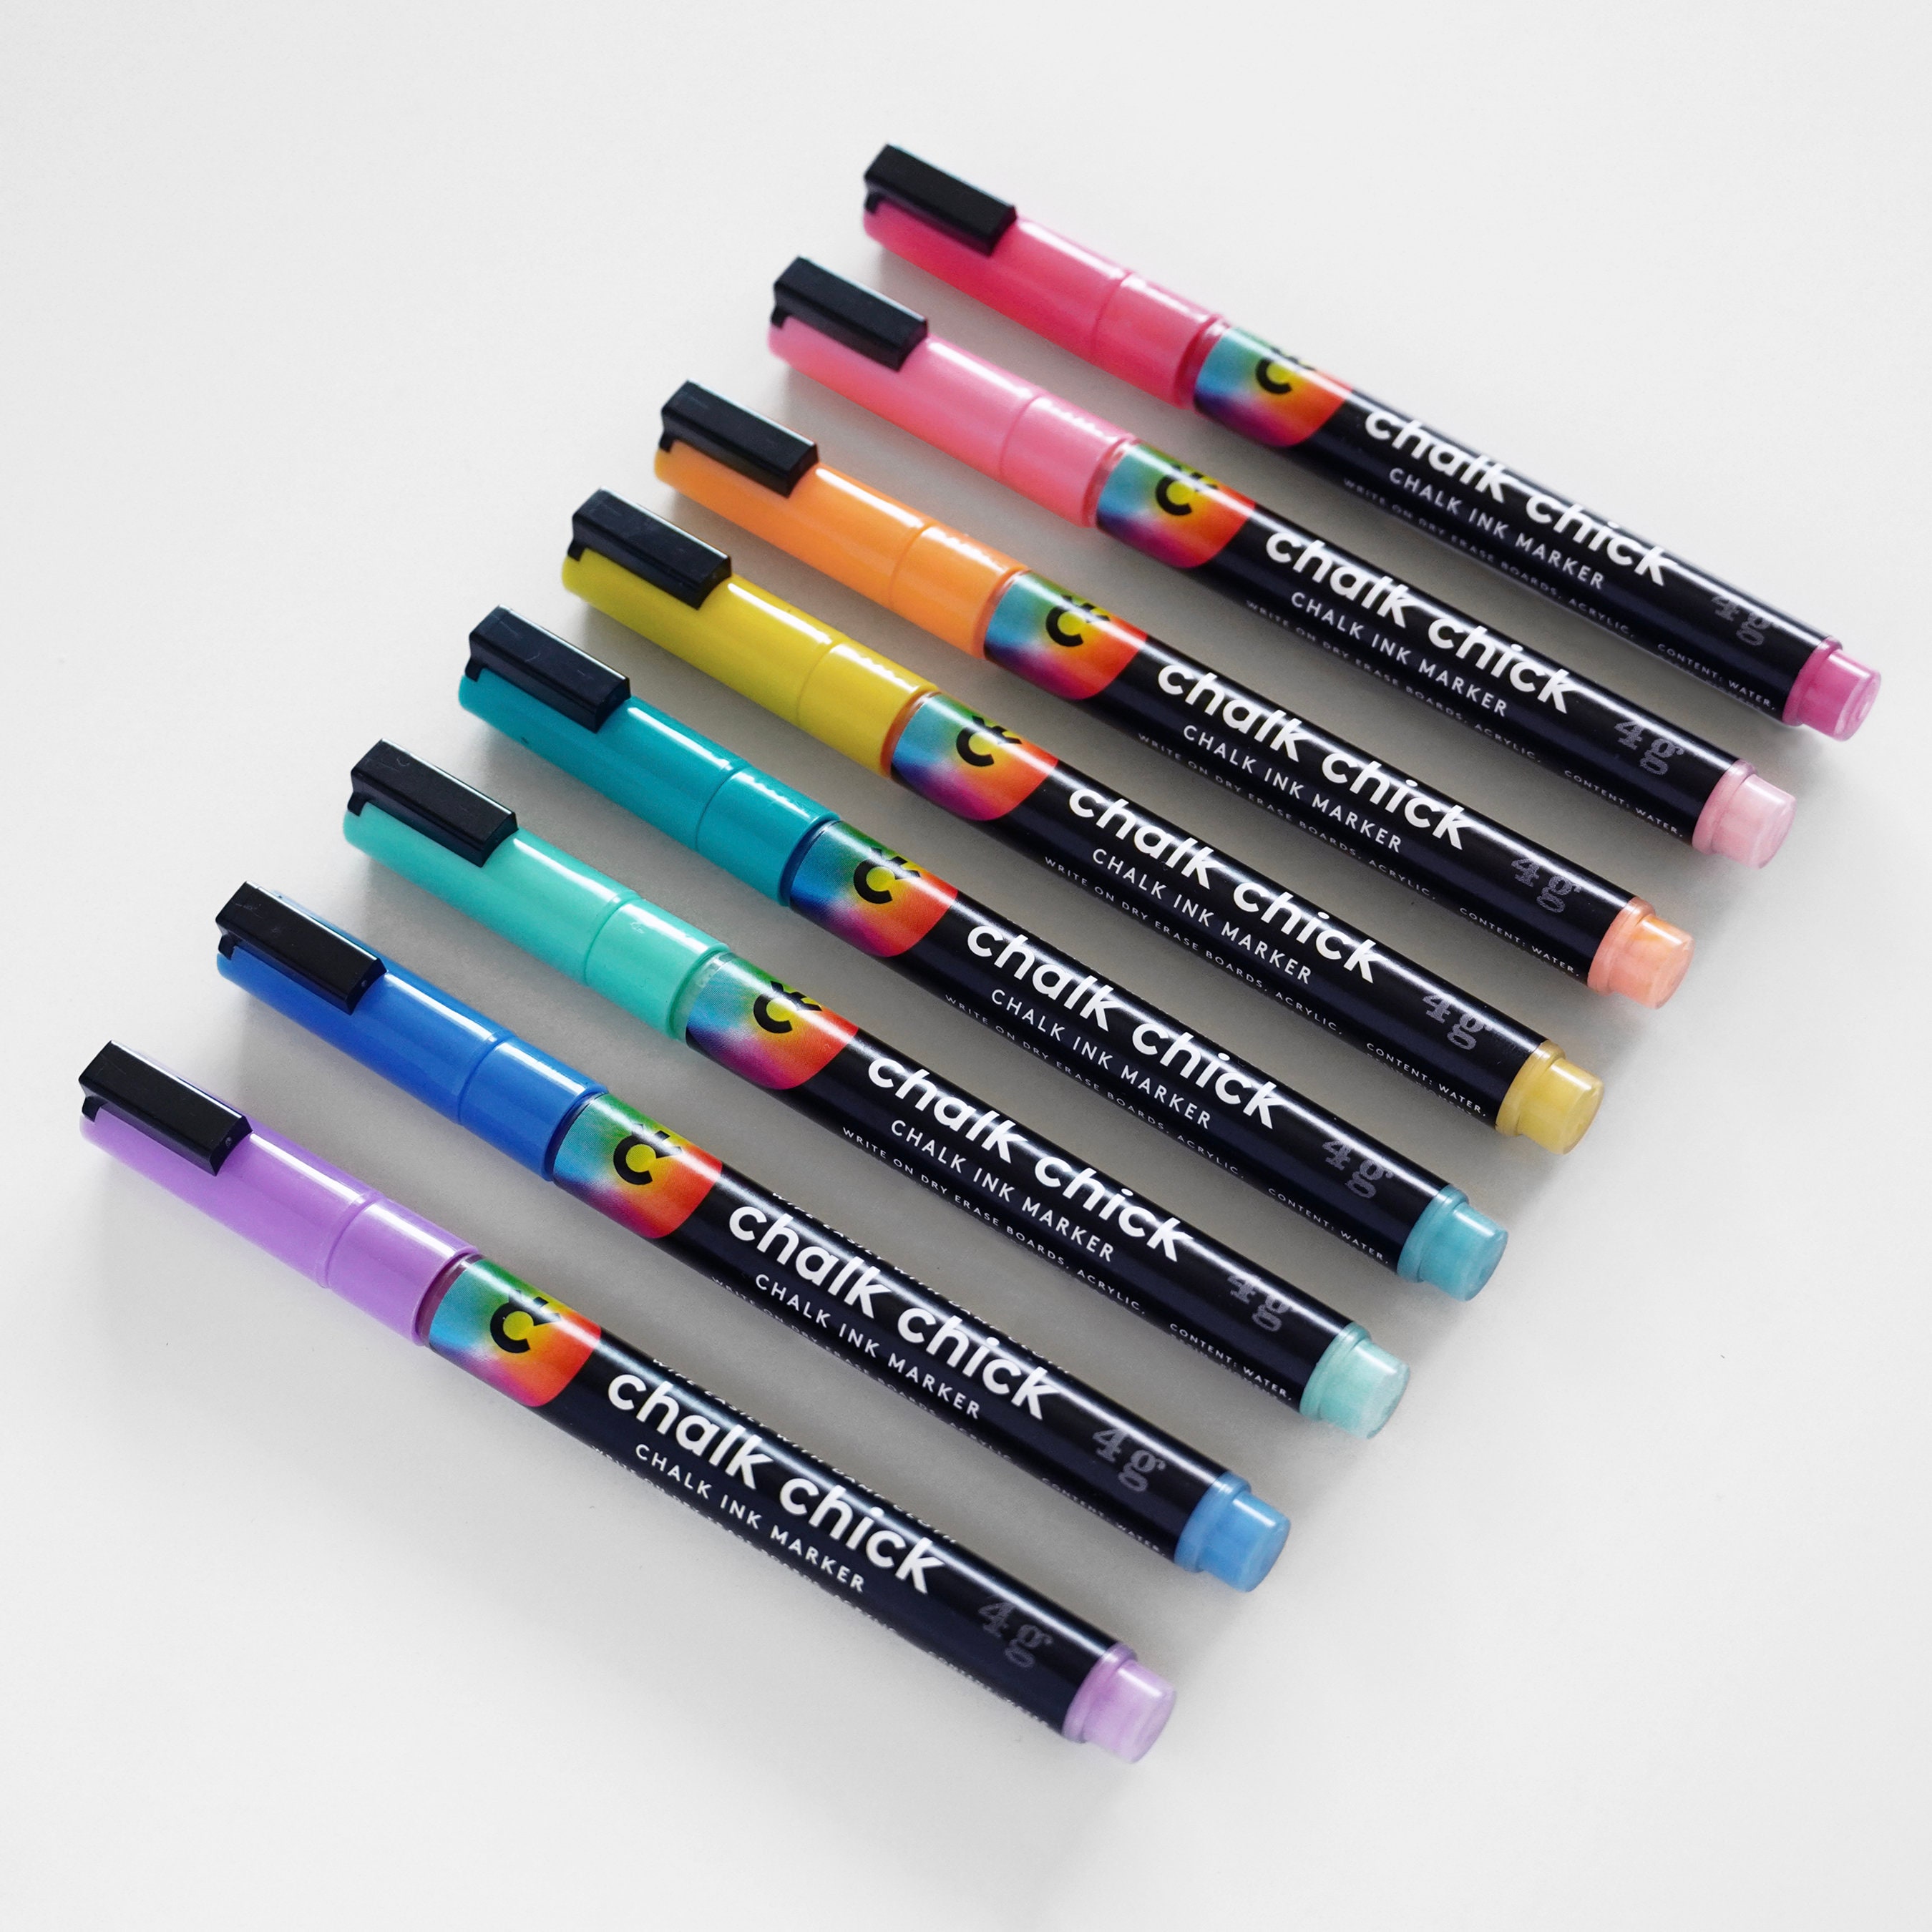 Chalk Markers -Wet Erase Marker Pens - Liquid Chalk Markers For  Chalkboards, Signs, Windows, Blackboard, Glass, Mirrors - Chalkboard  Markers With Reve